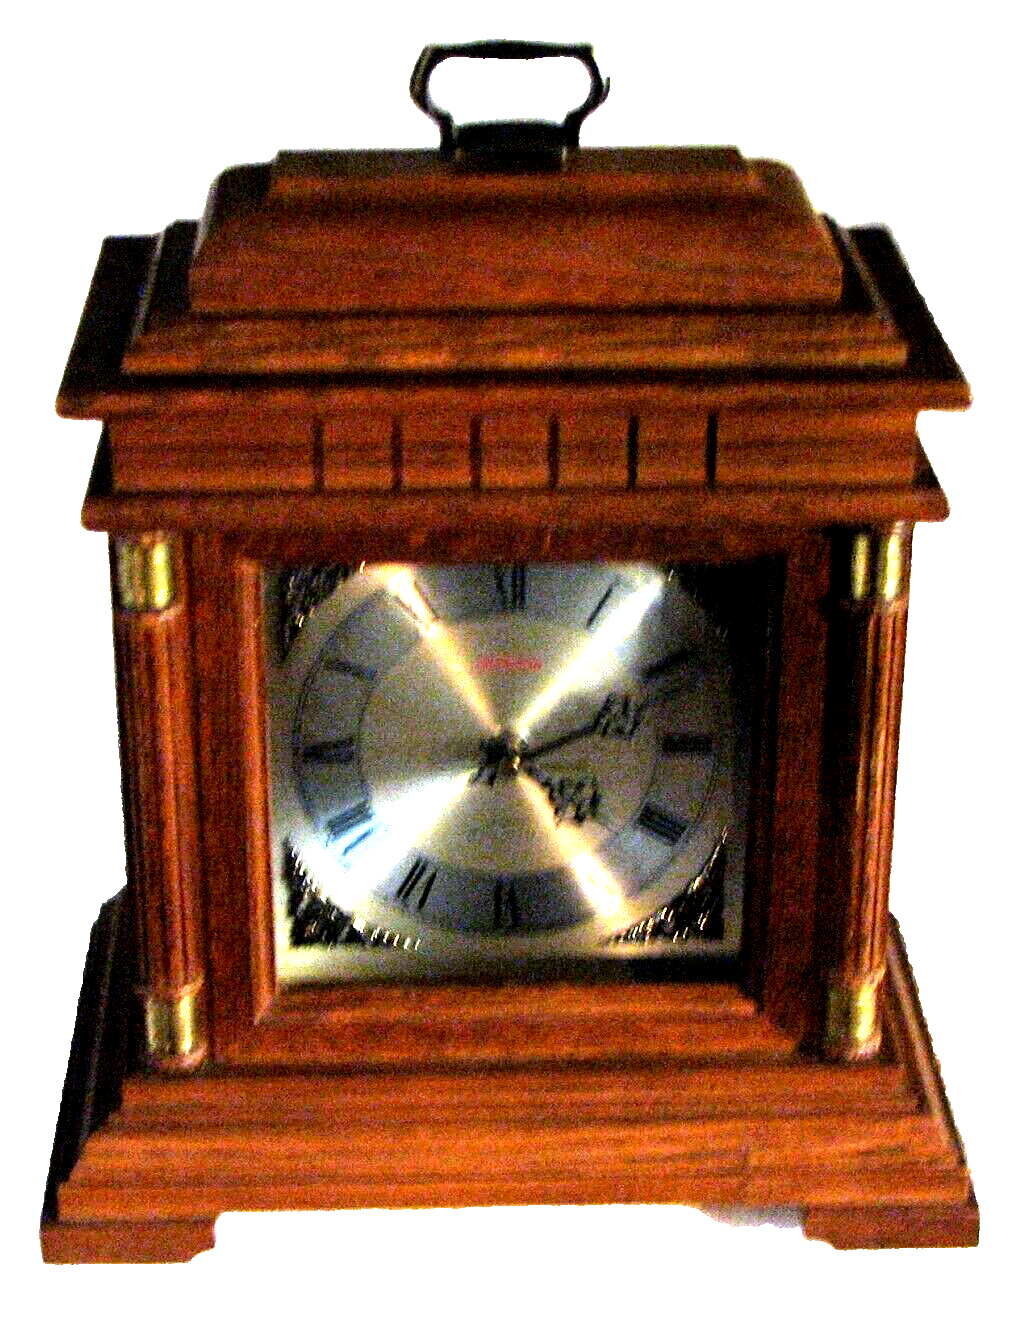 Primary image for Sunbeam Westmenster Solid Oak Chime Mantel Quartz Clock